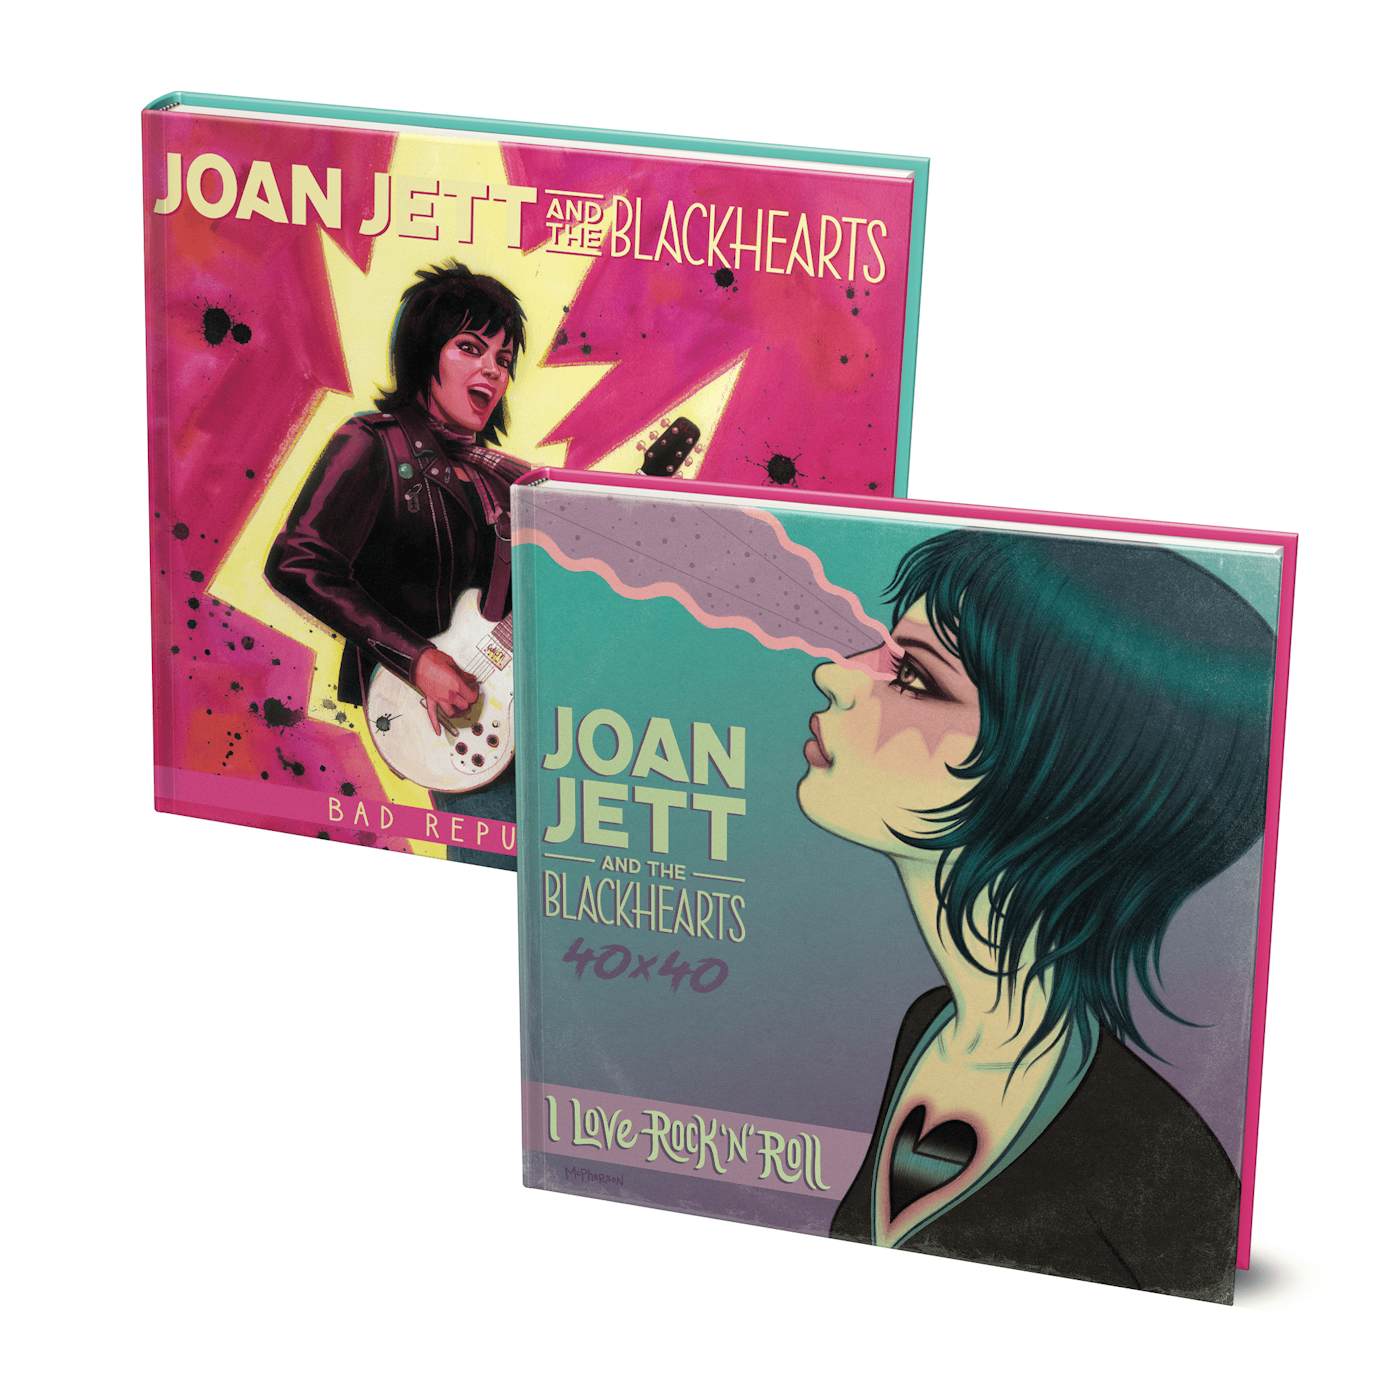 JOAN JETT & THE BLACKHEARTS - 40x40: Bad Reputation/I Love Rock 'n' Roll - Hardcover Book